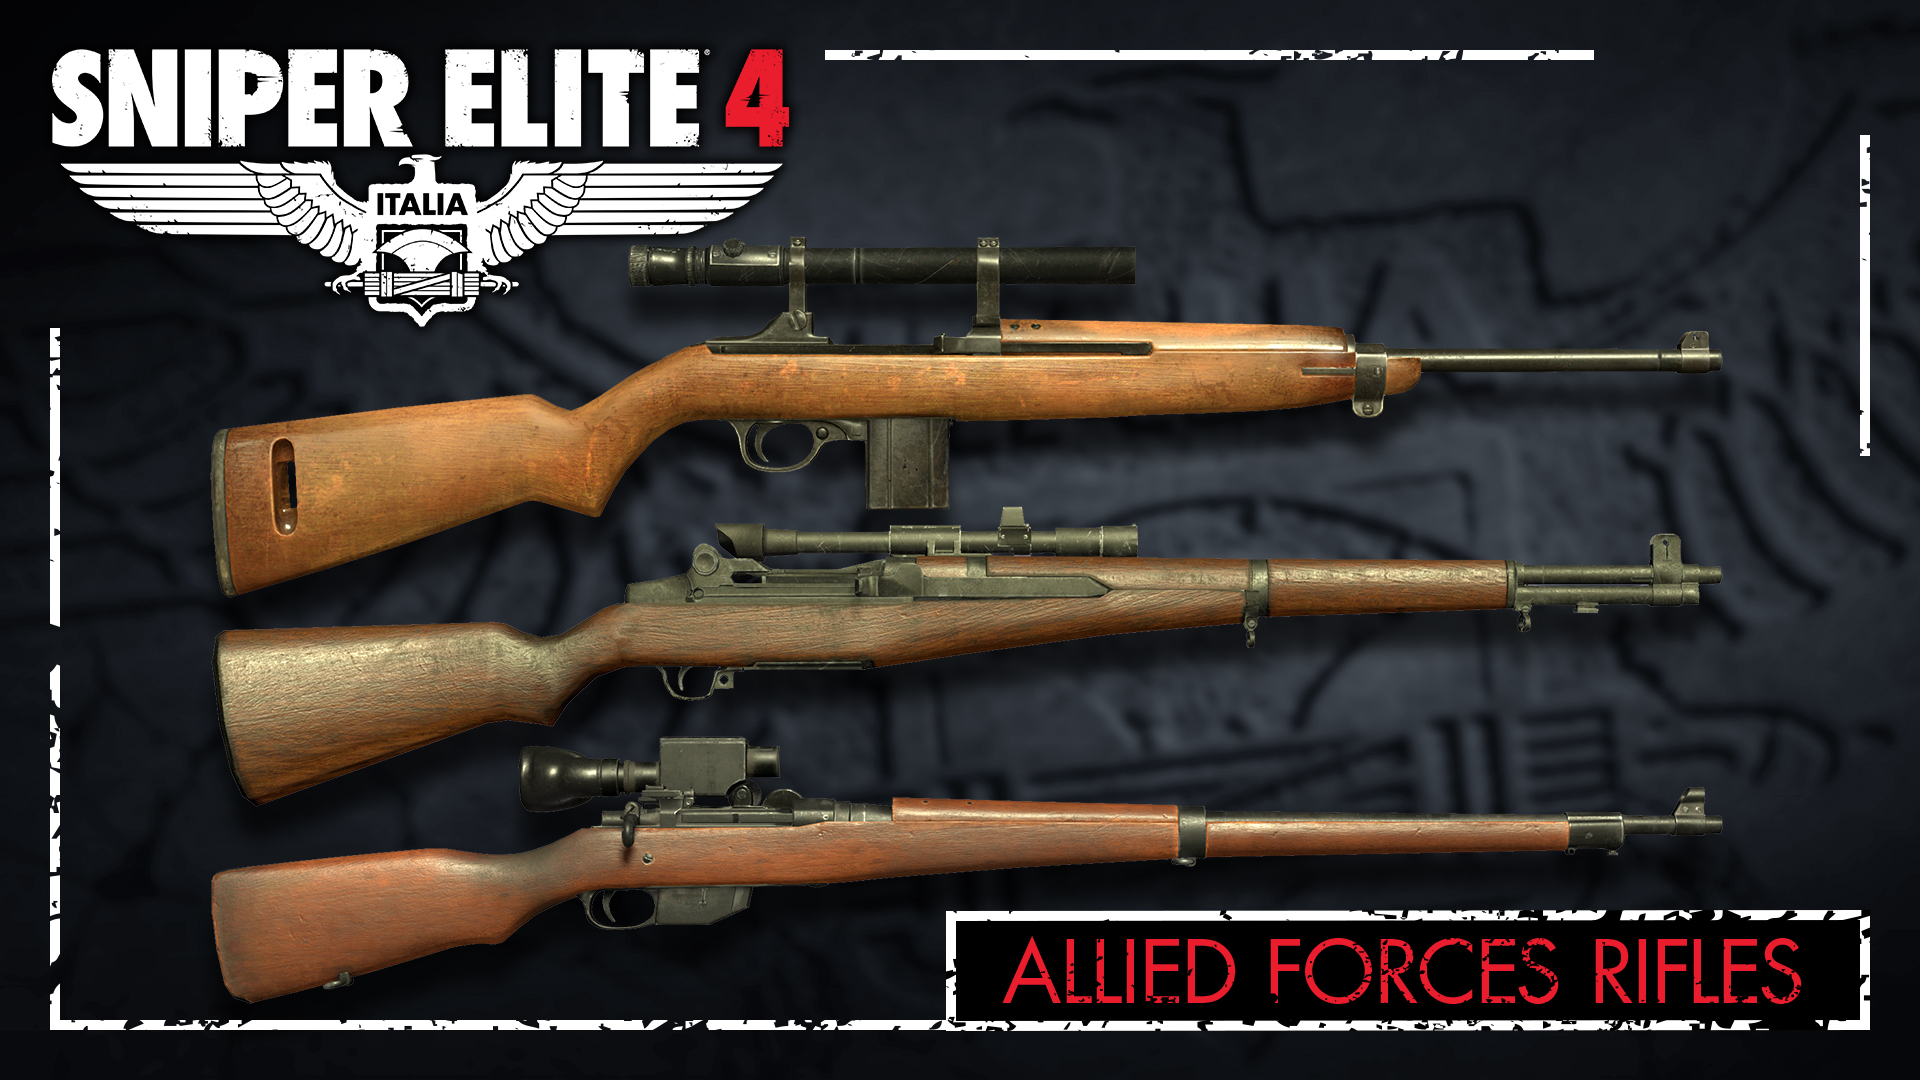 [$ 4.51] Sniper Elite 4 - Allied Forces Rifle Pack DLC Steam CD Key